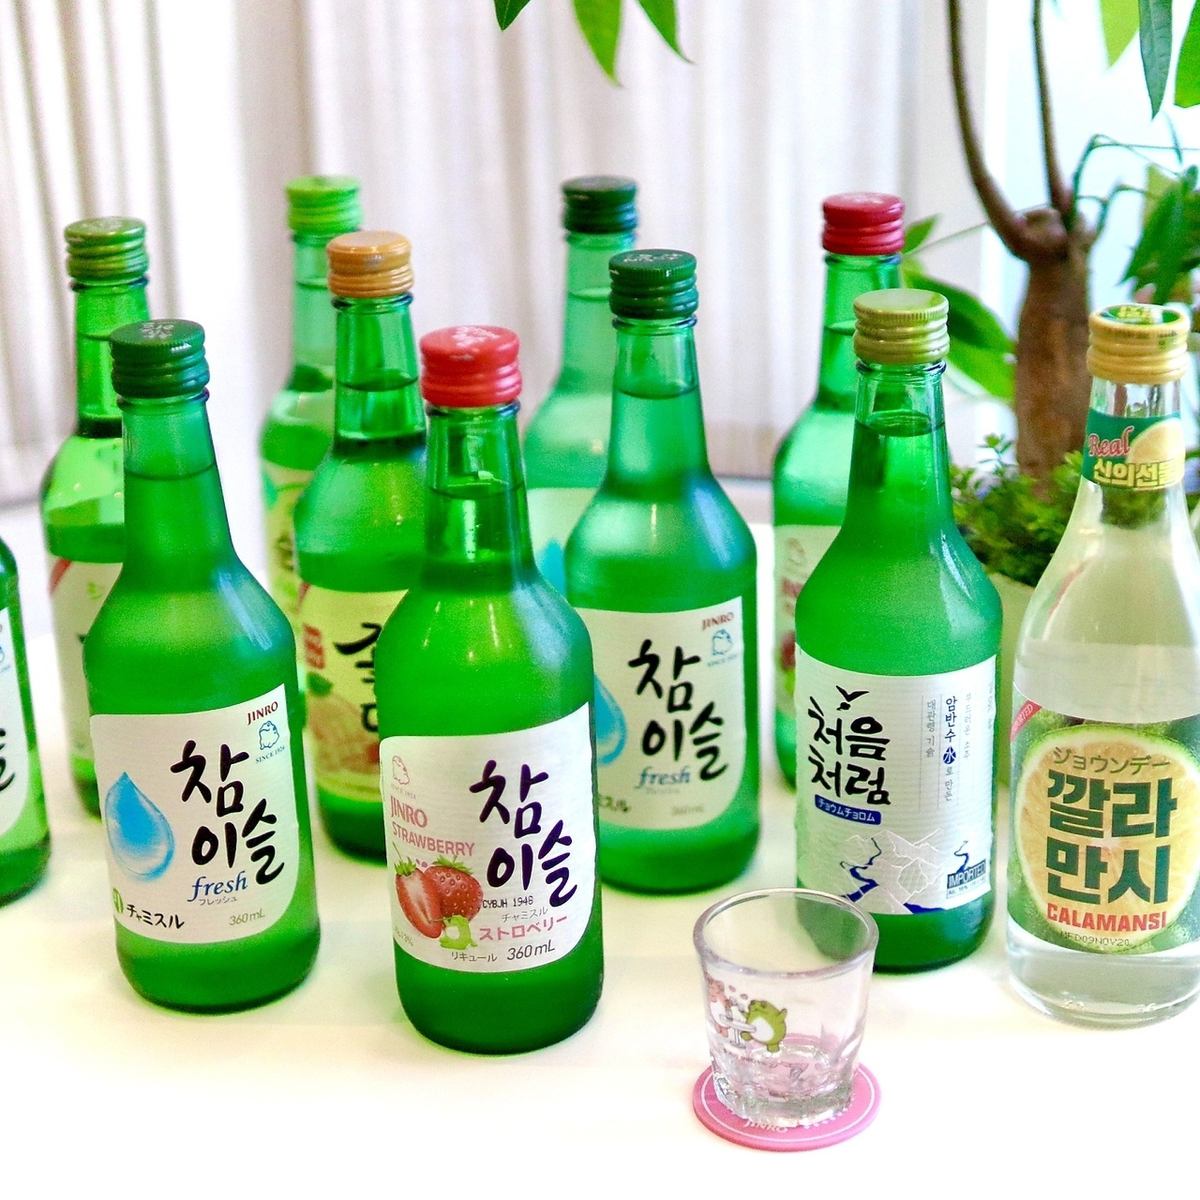 A variety of Korean soju available